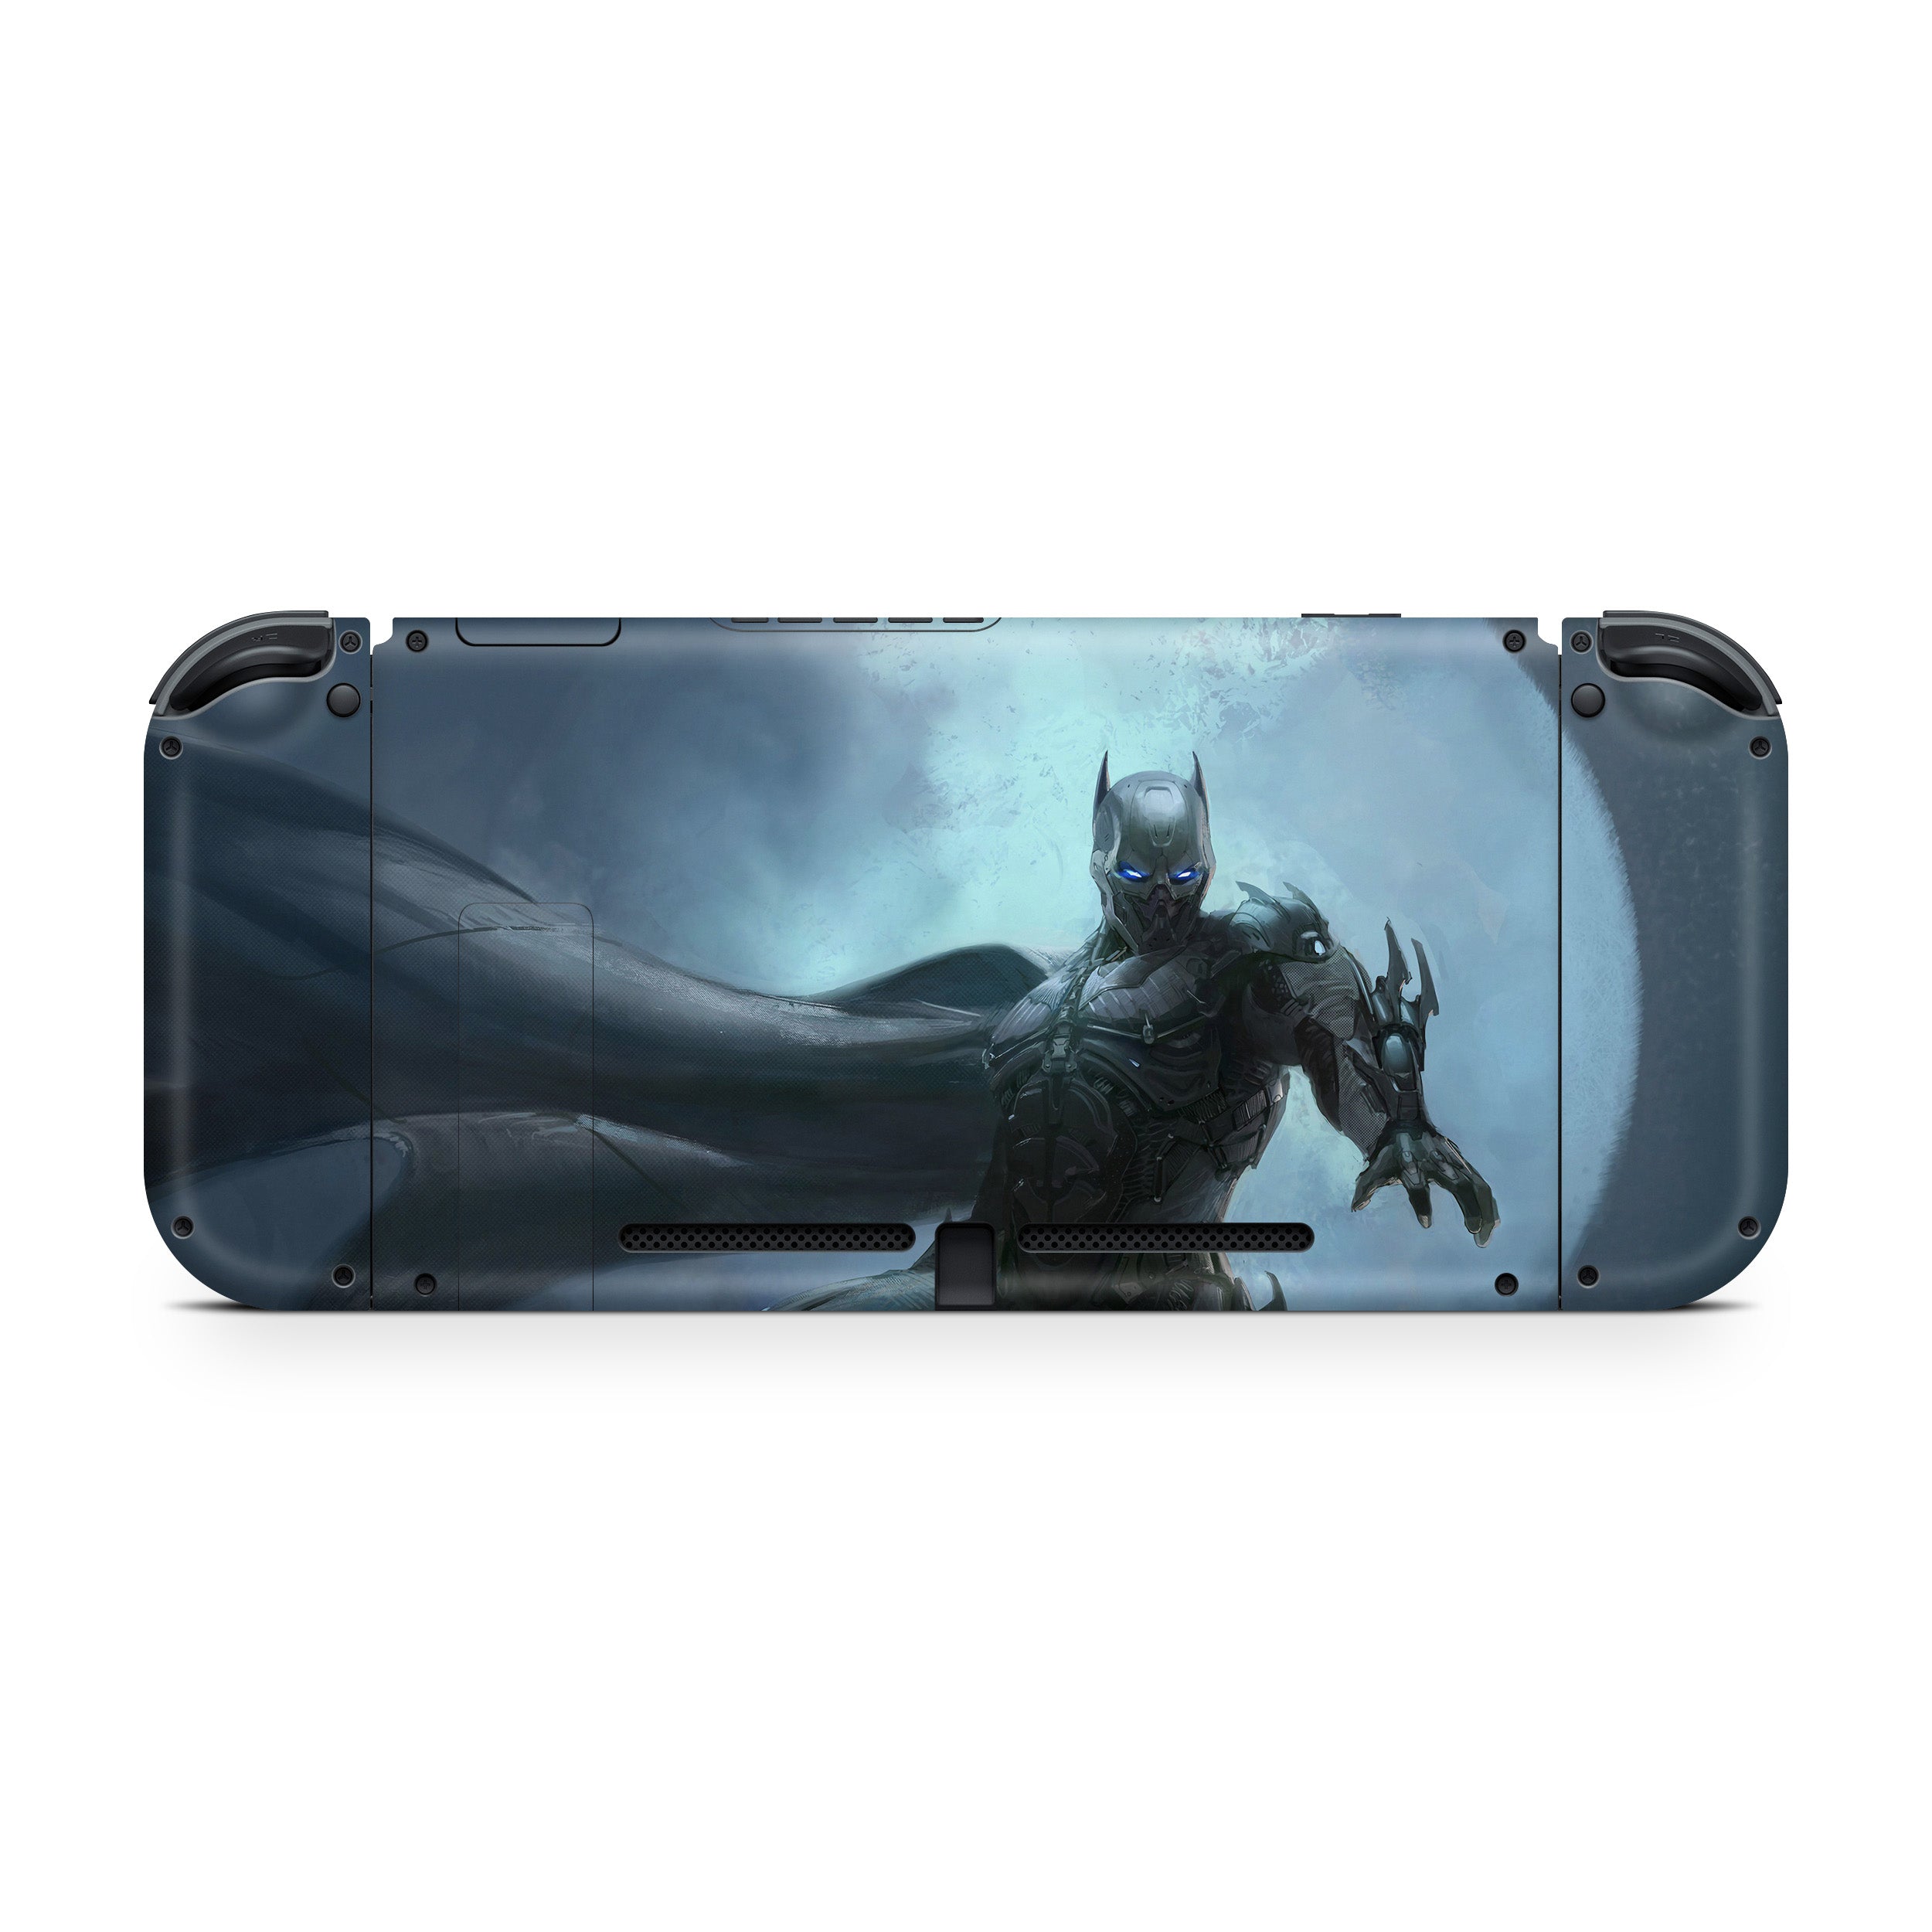 A video game skin featuring a DC Comics Batman design for the Nintendo Switch.